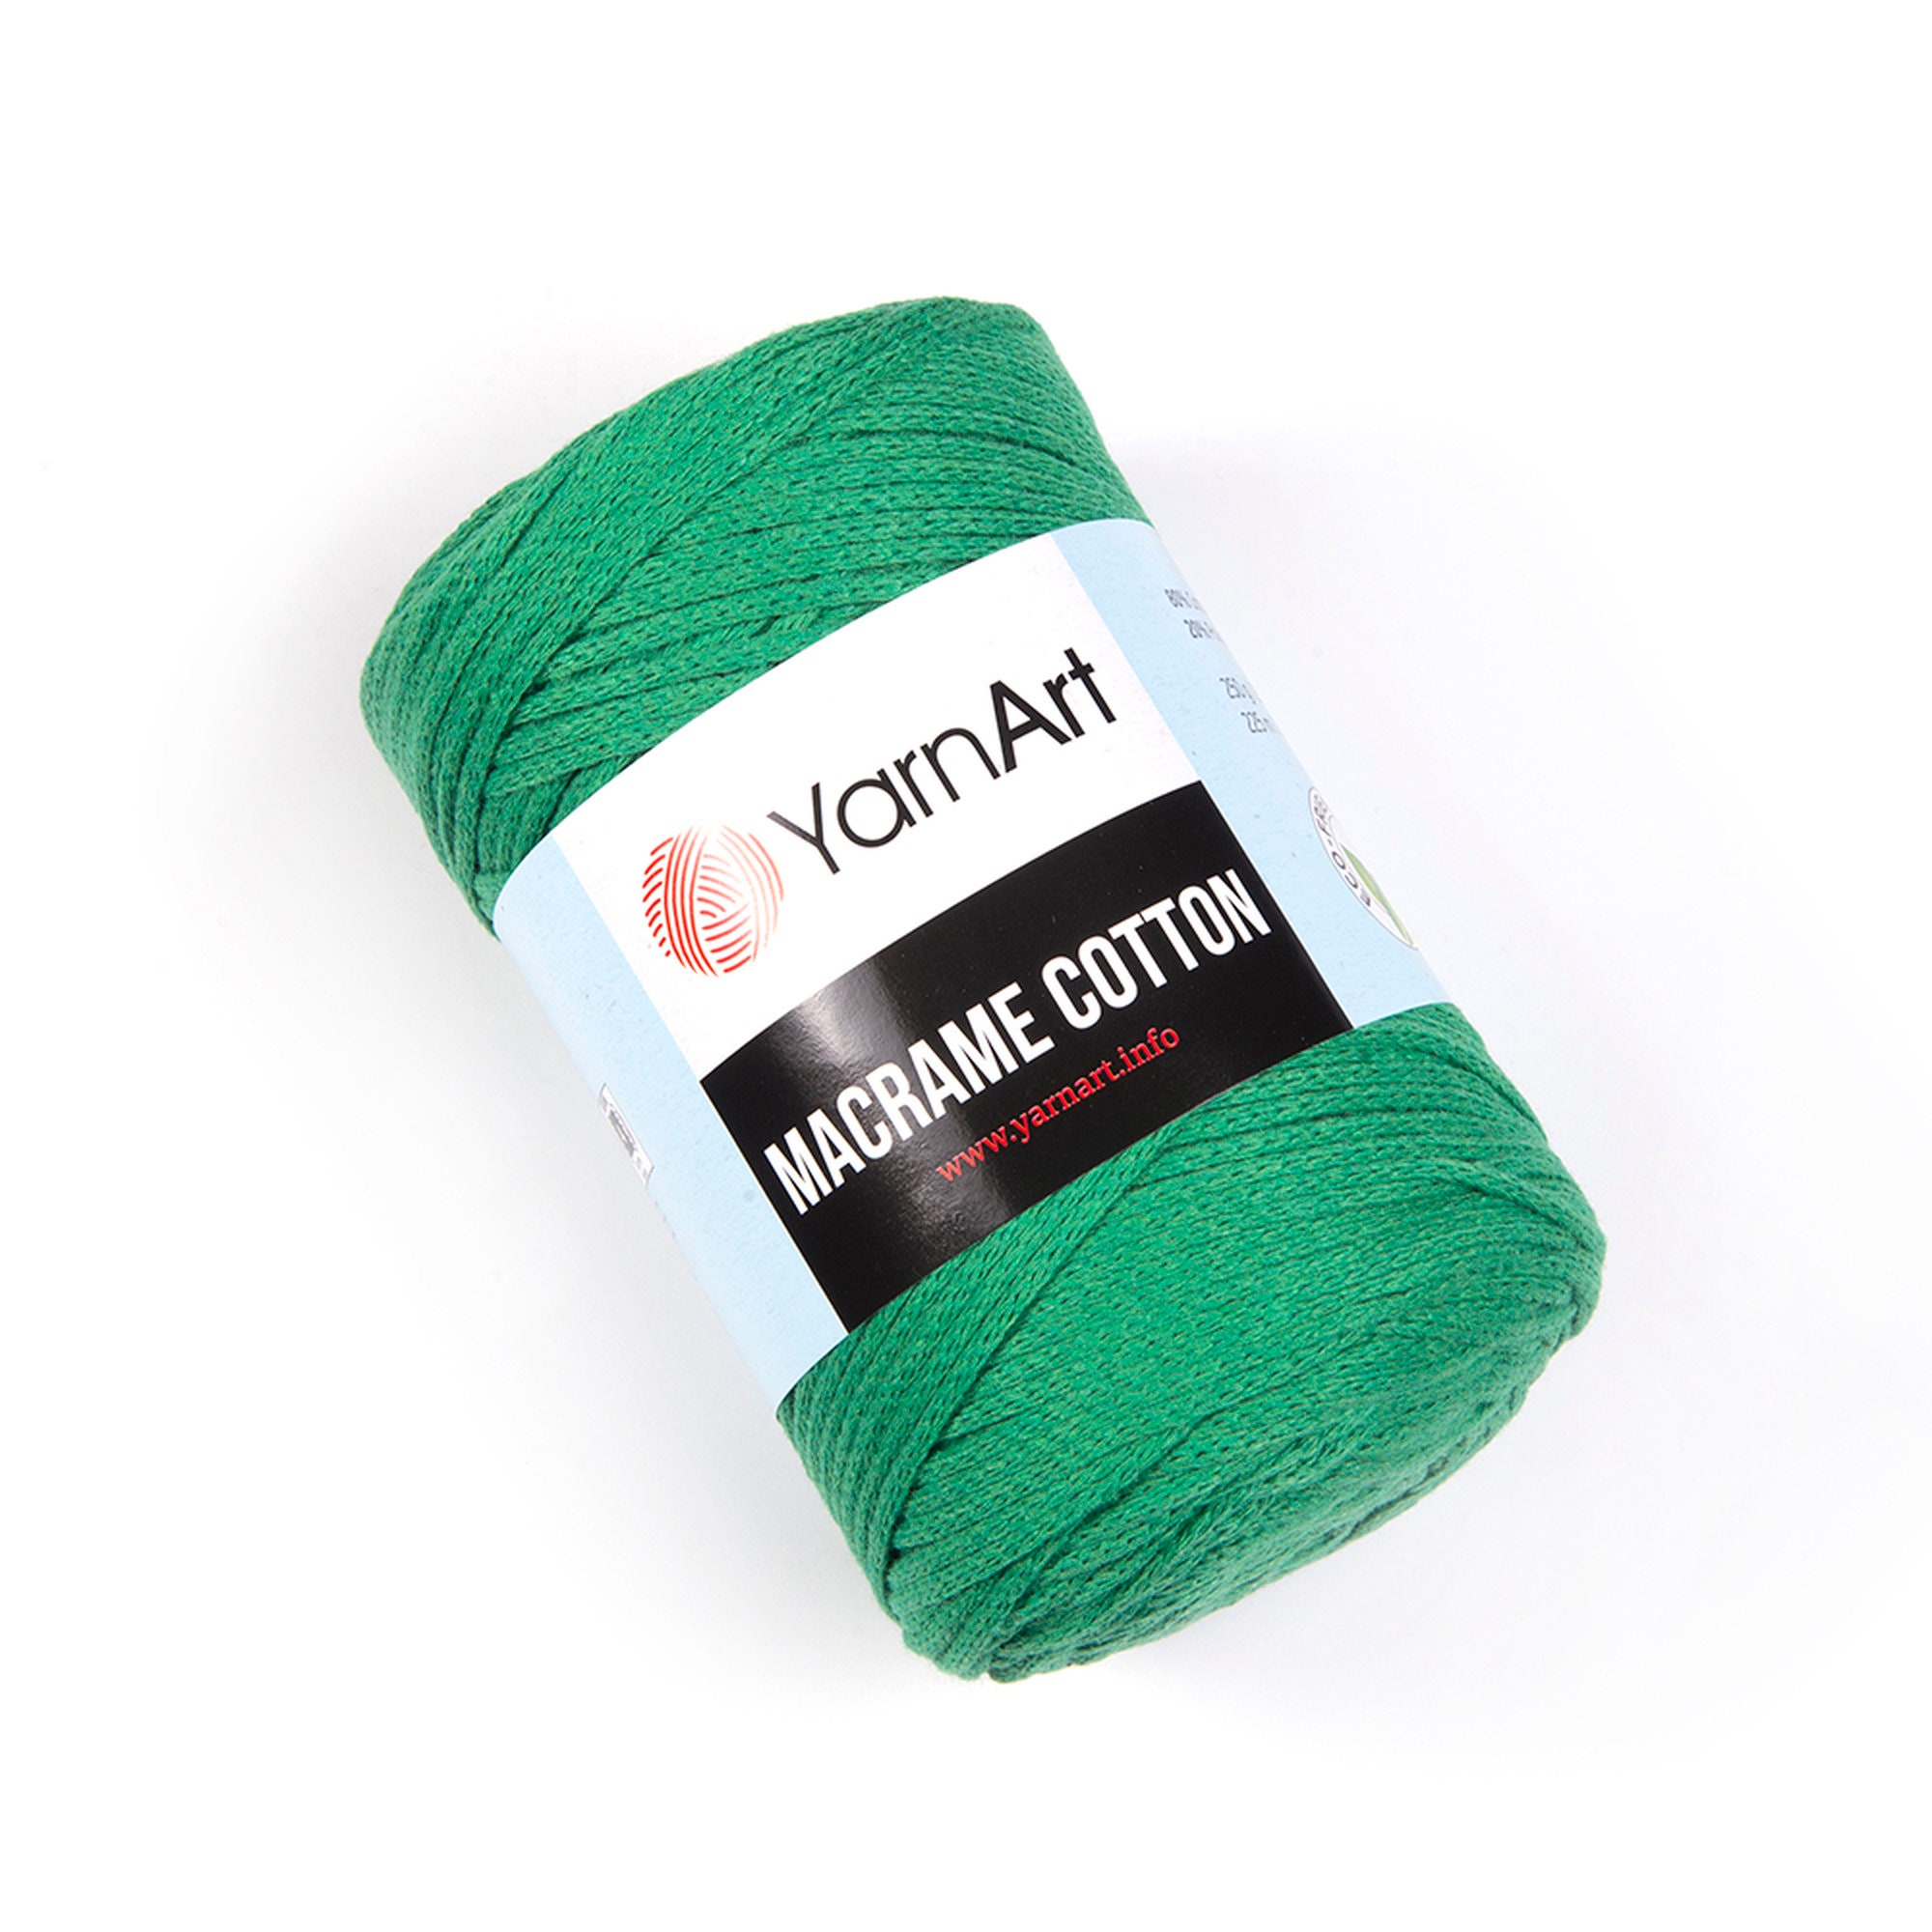 Yarnart Macrame Cord 5 Mm-Crochet Yarn, Yarn, Cord Bag, Rug, 60